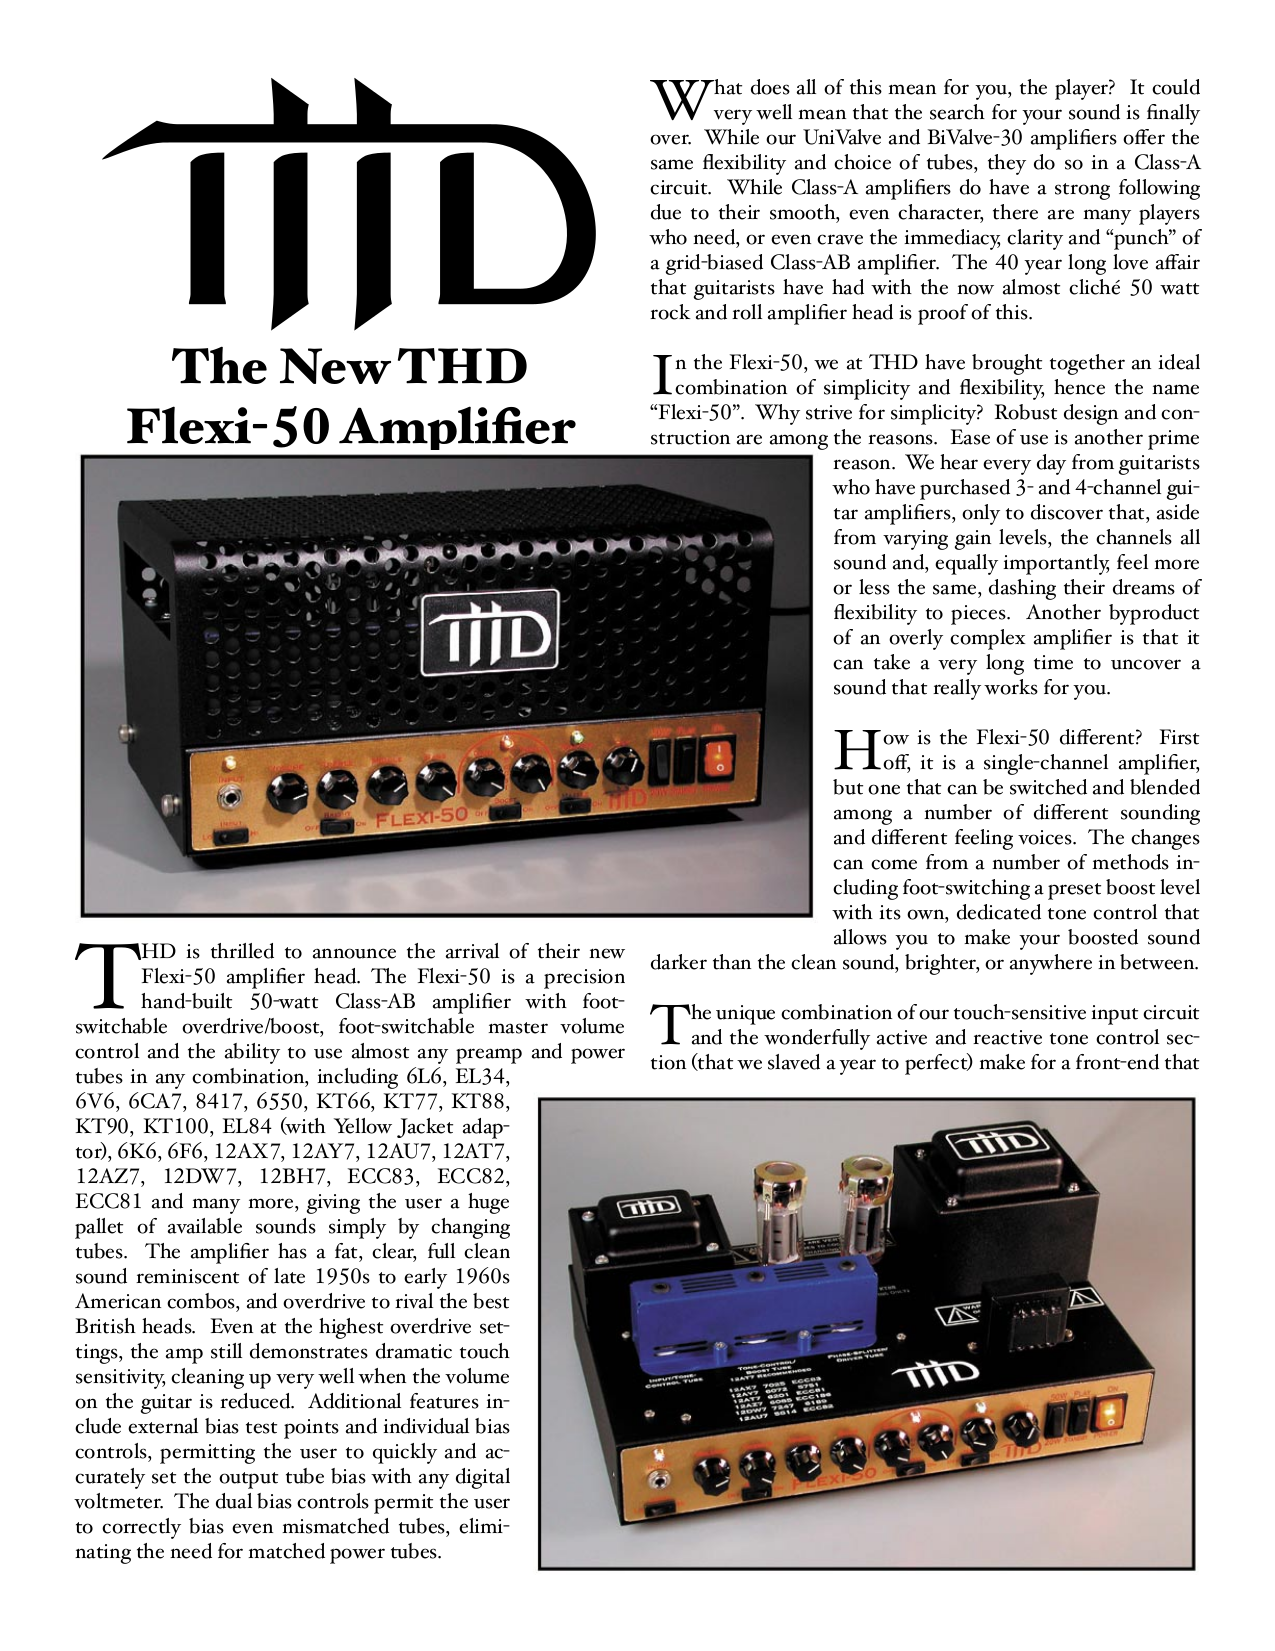 pdf for THD Amp Flexi-50 manual